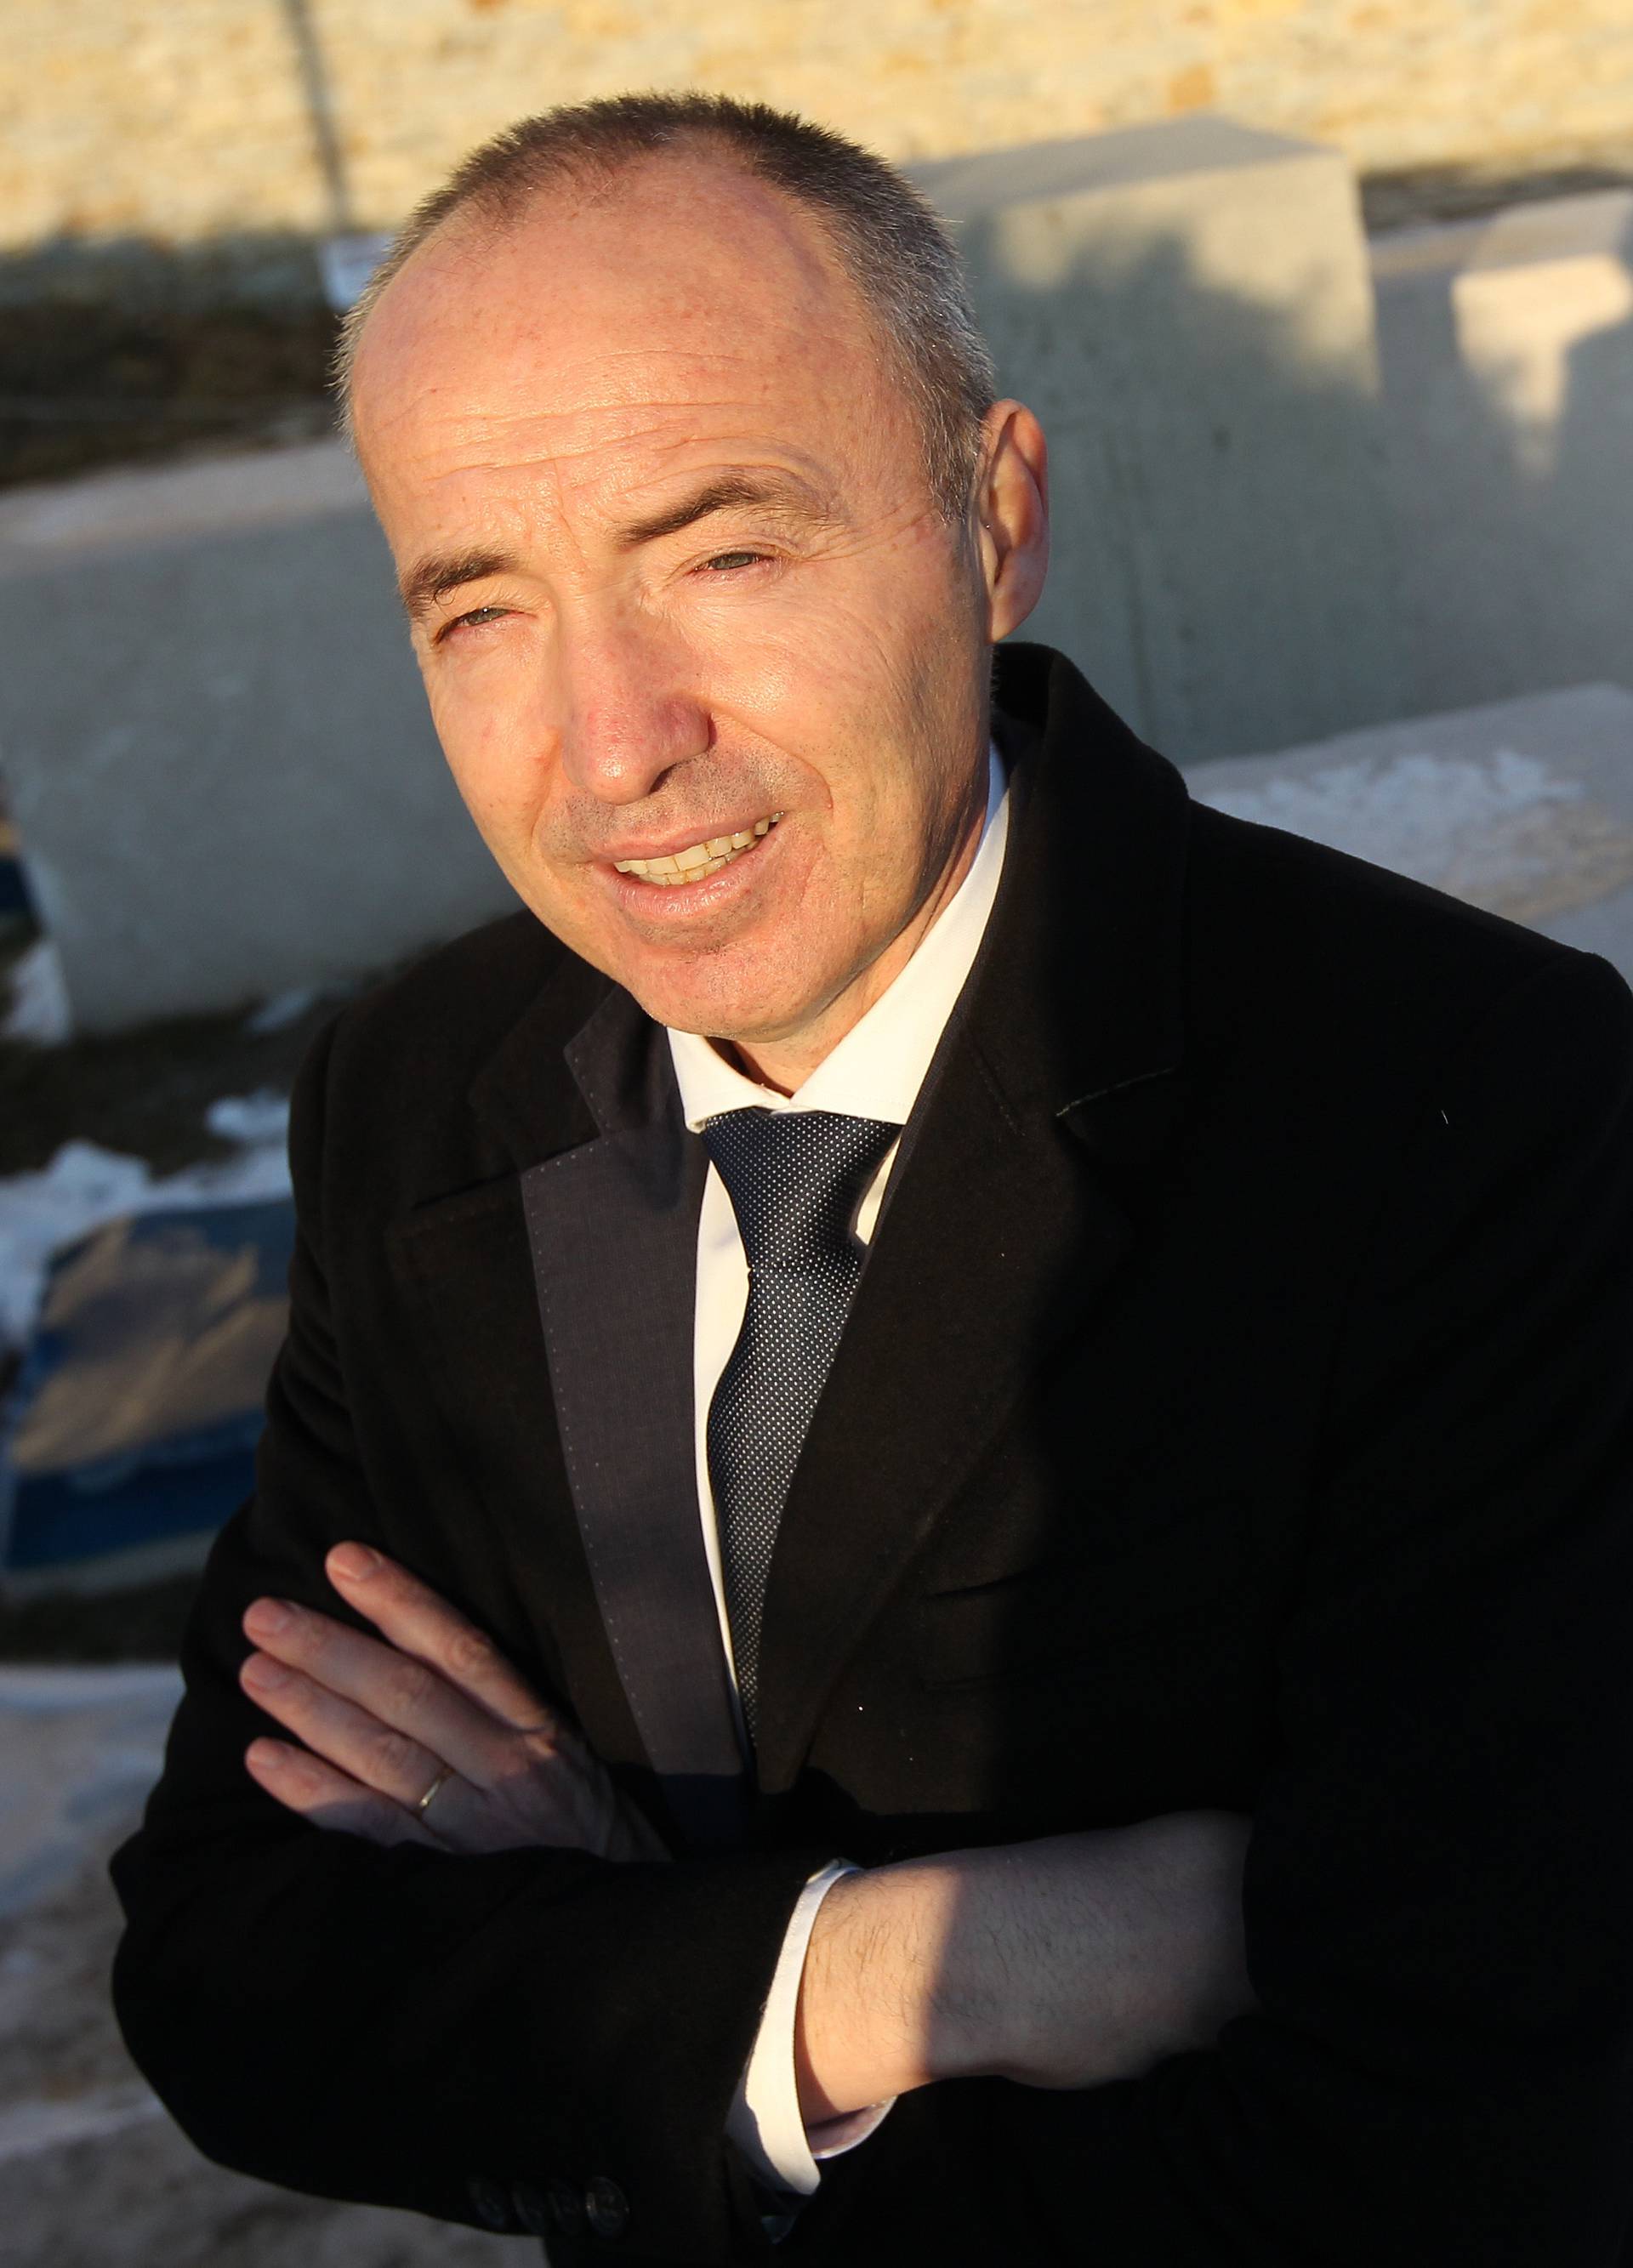 Damir Krsticevic